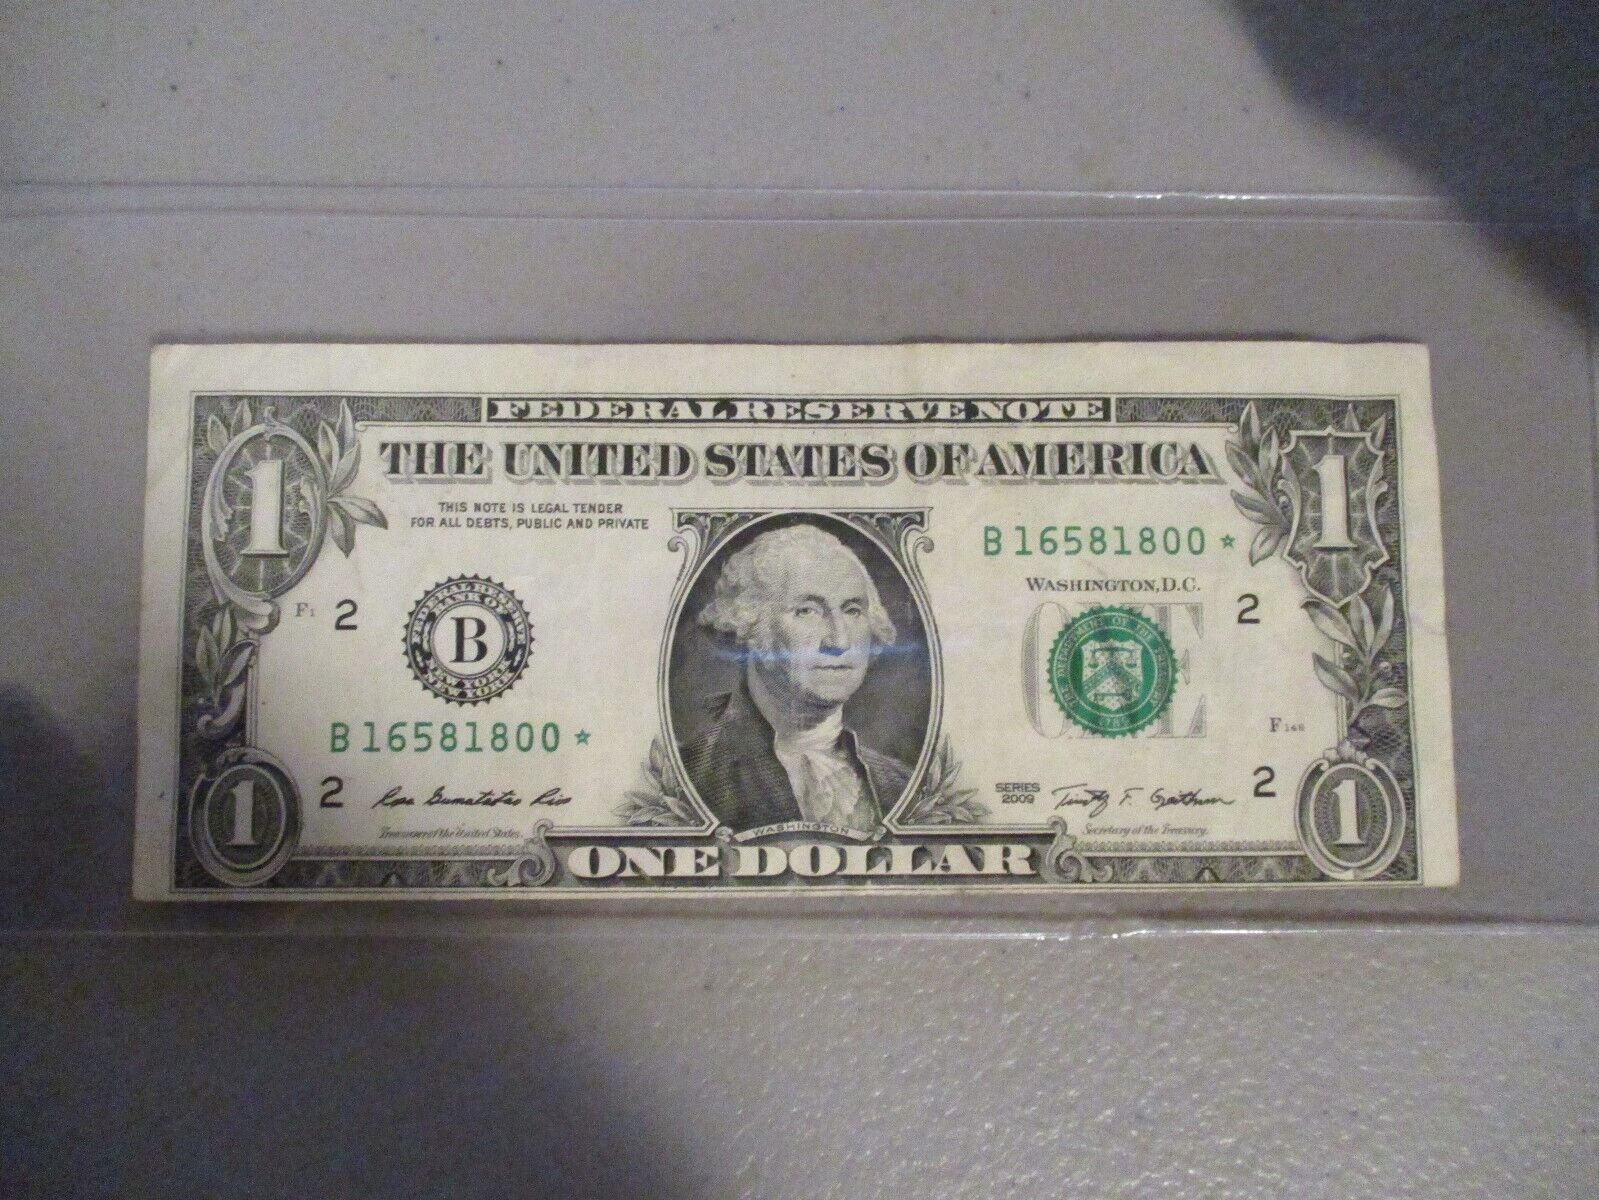 $400 in one dollar bills : r/mildlyinteresting